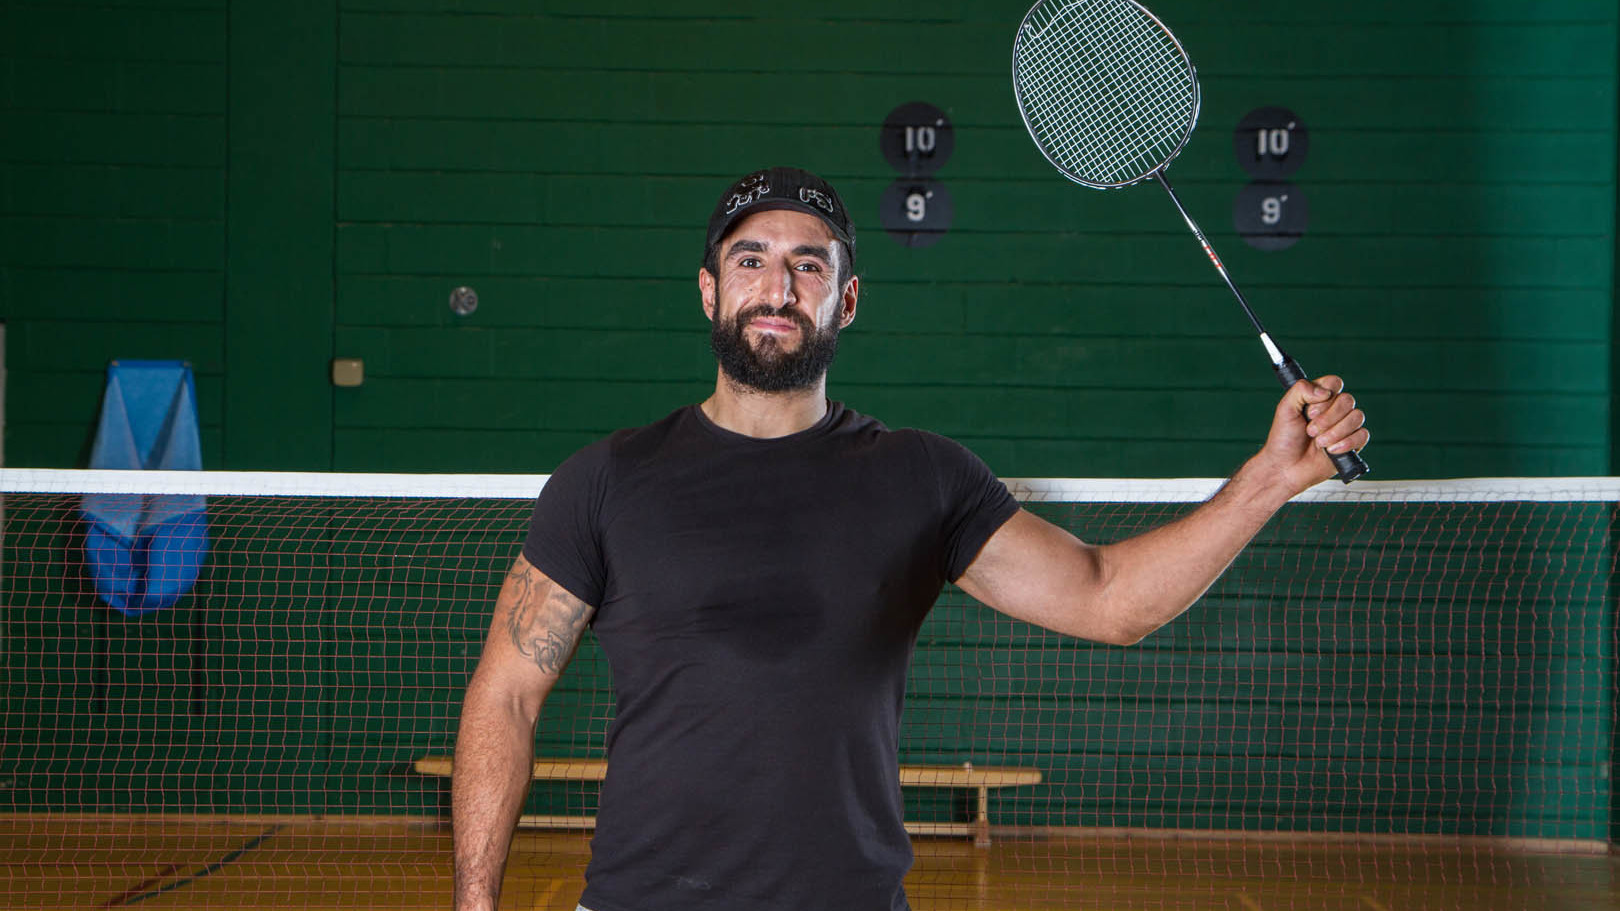 Man with badminton racket